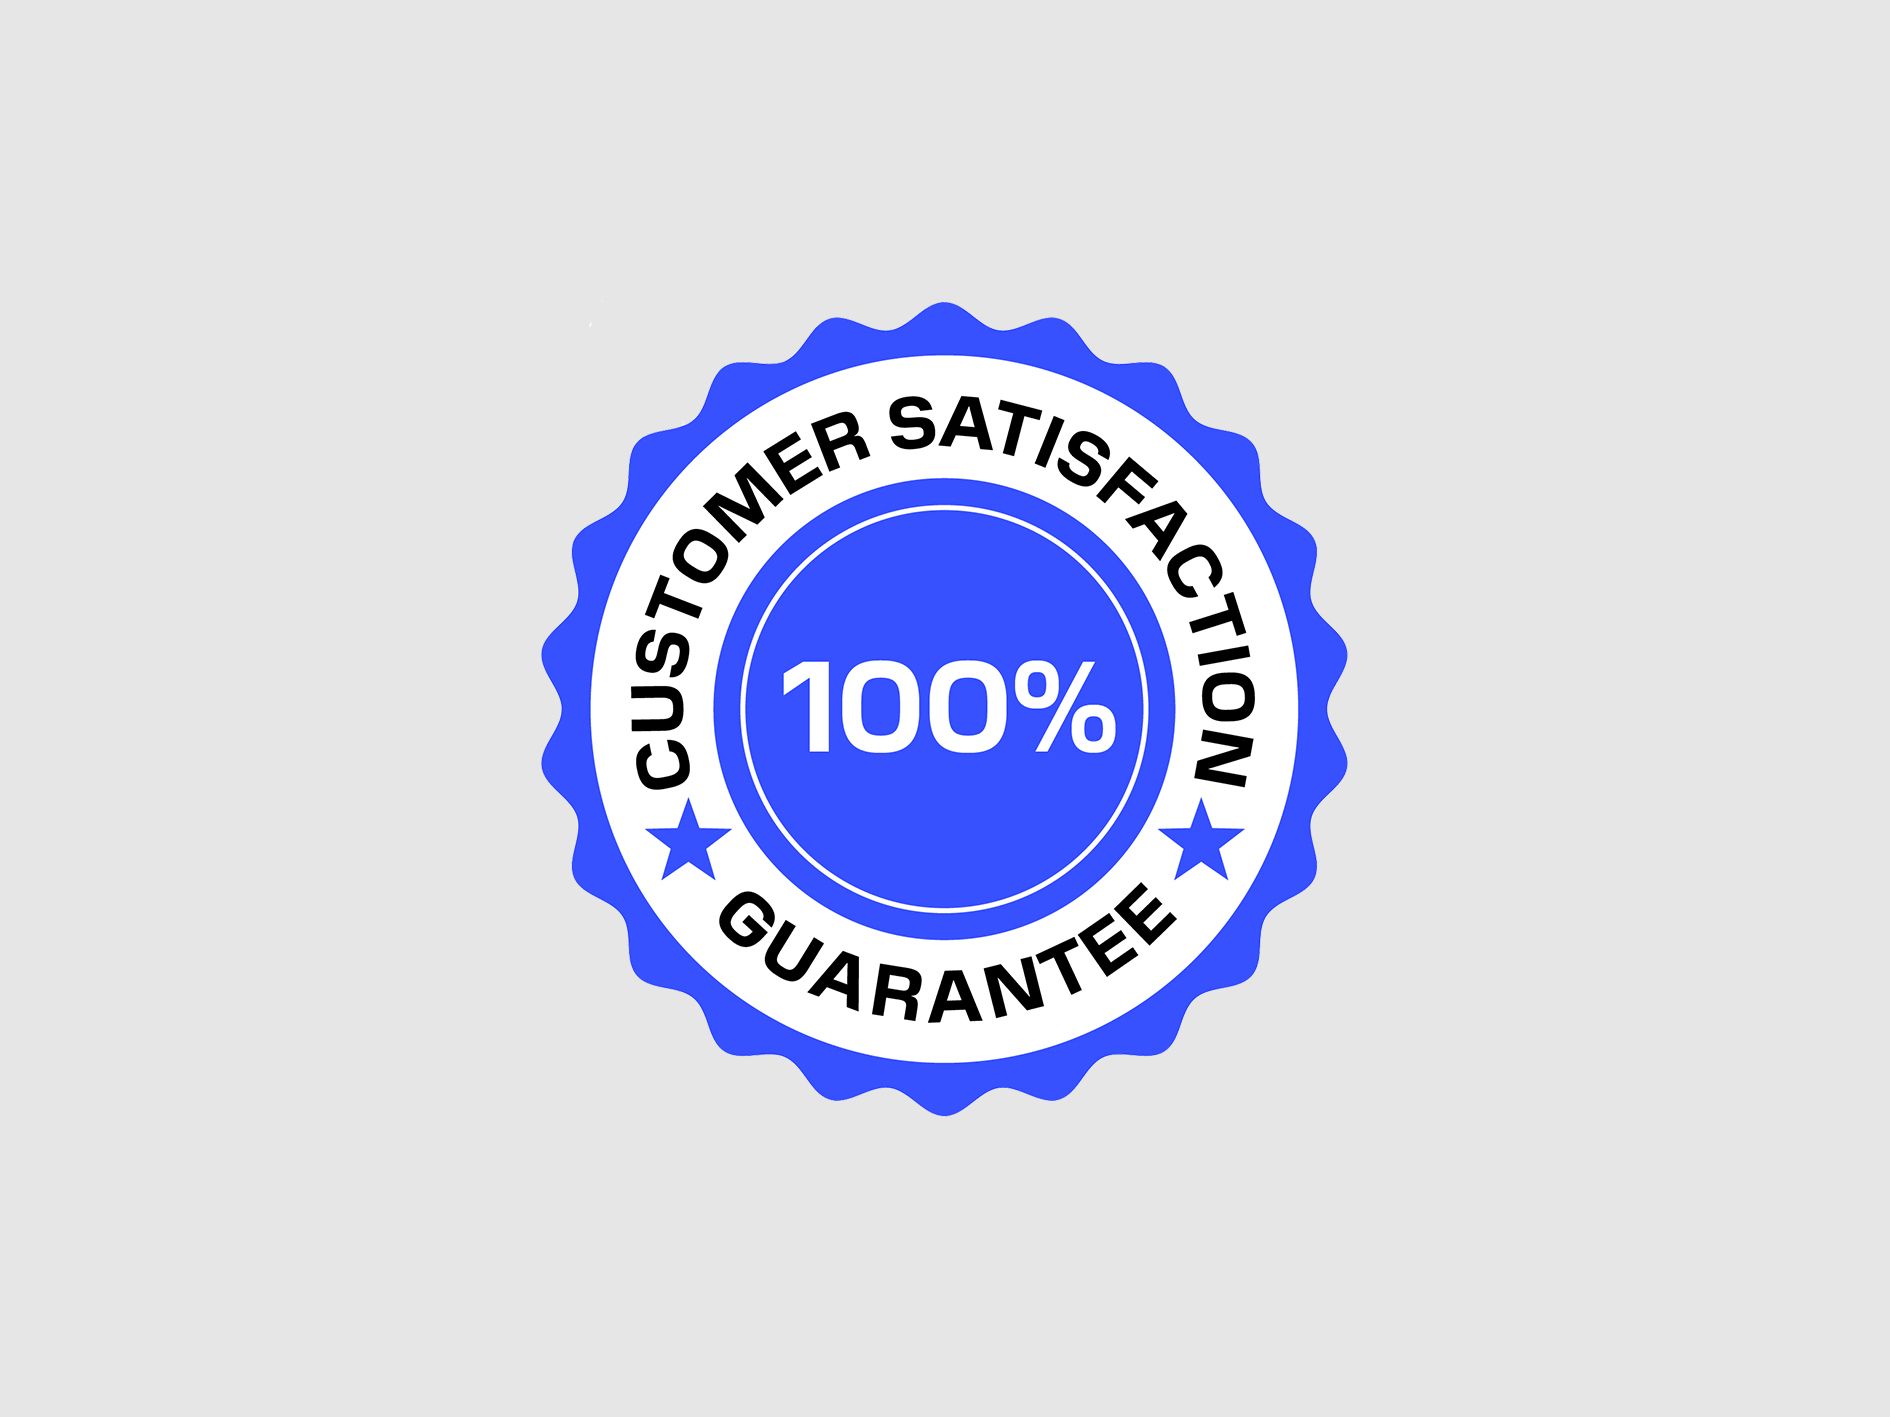 Customer satisfaction guarantee logo